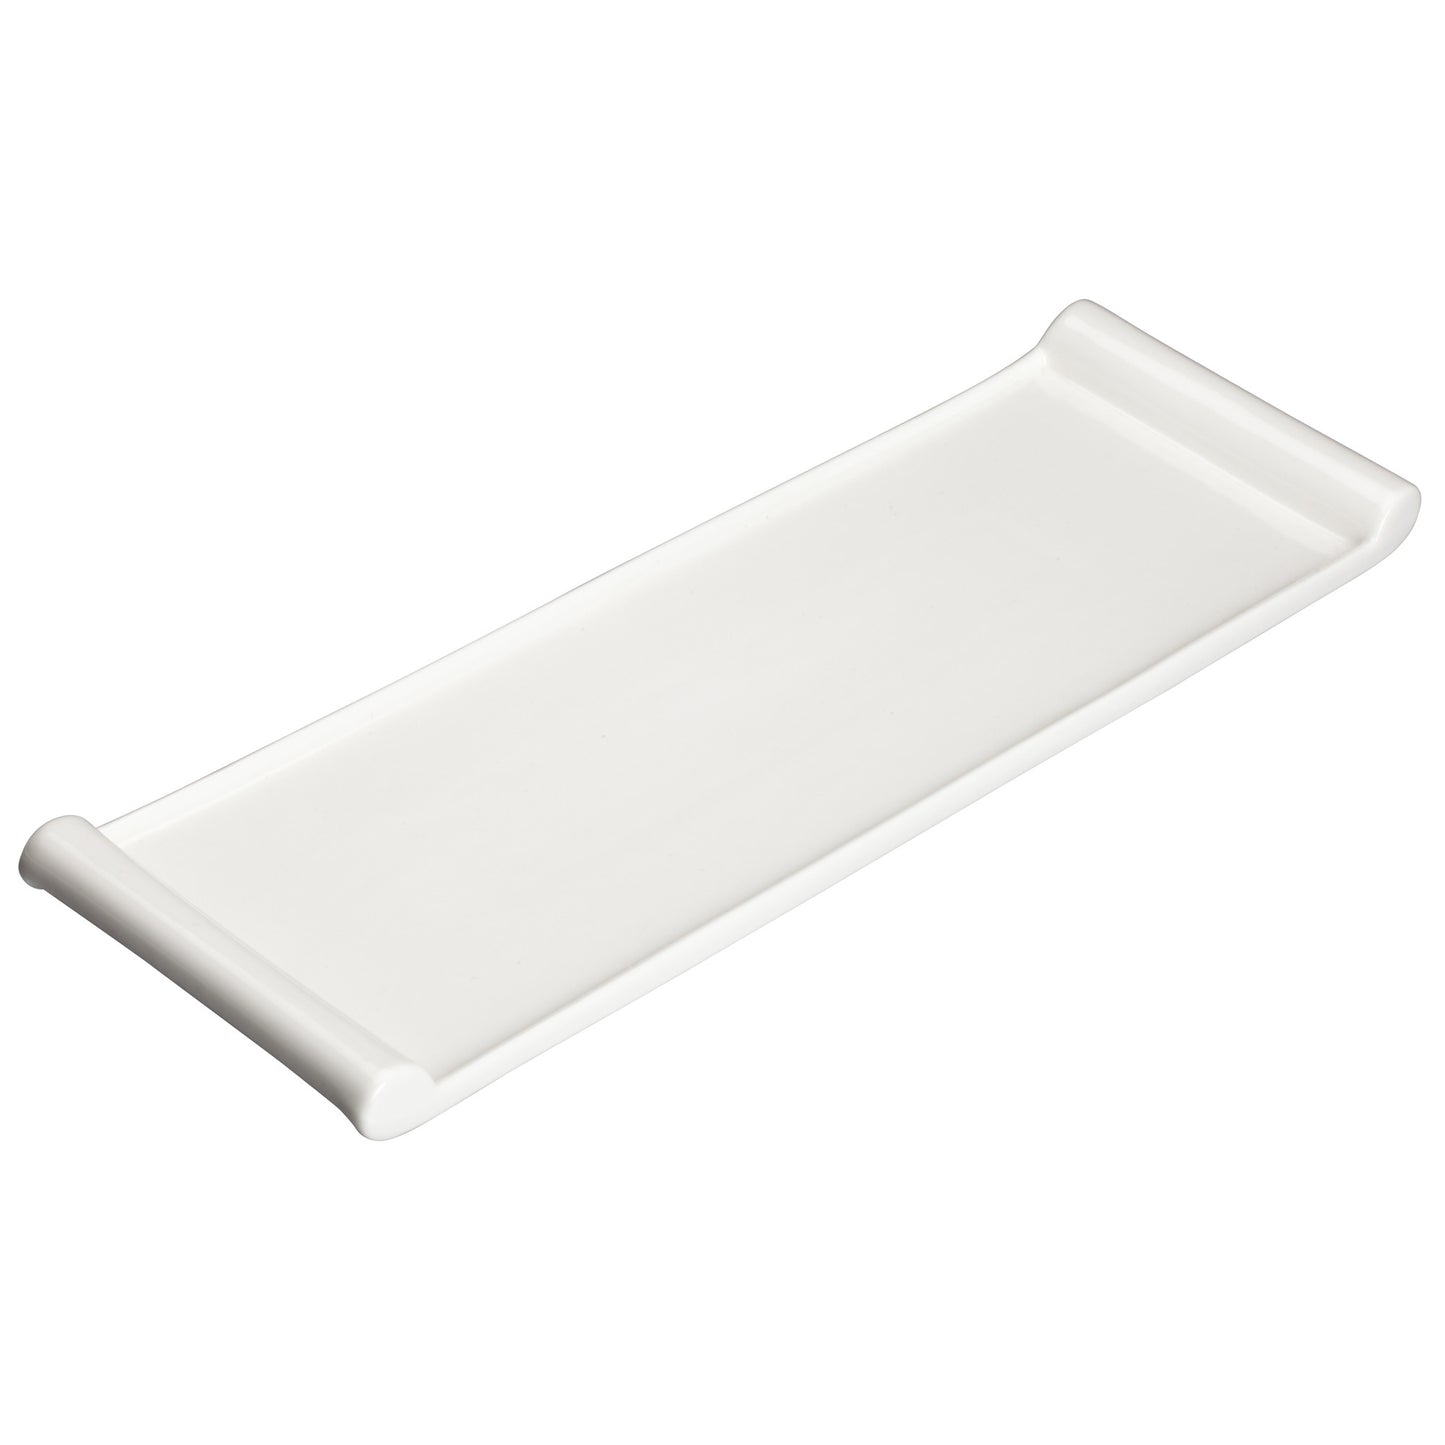 WDP017-119 - 20-1/4" x 6-1/8" Porcelain Rectangular Platter, Bright White, 6 pcs/case